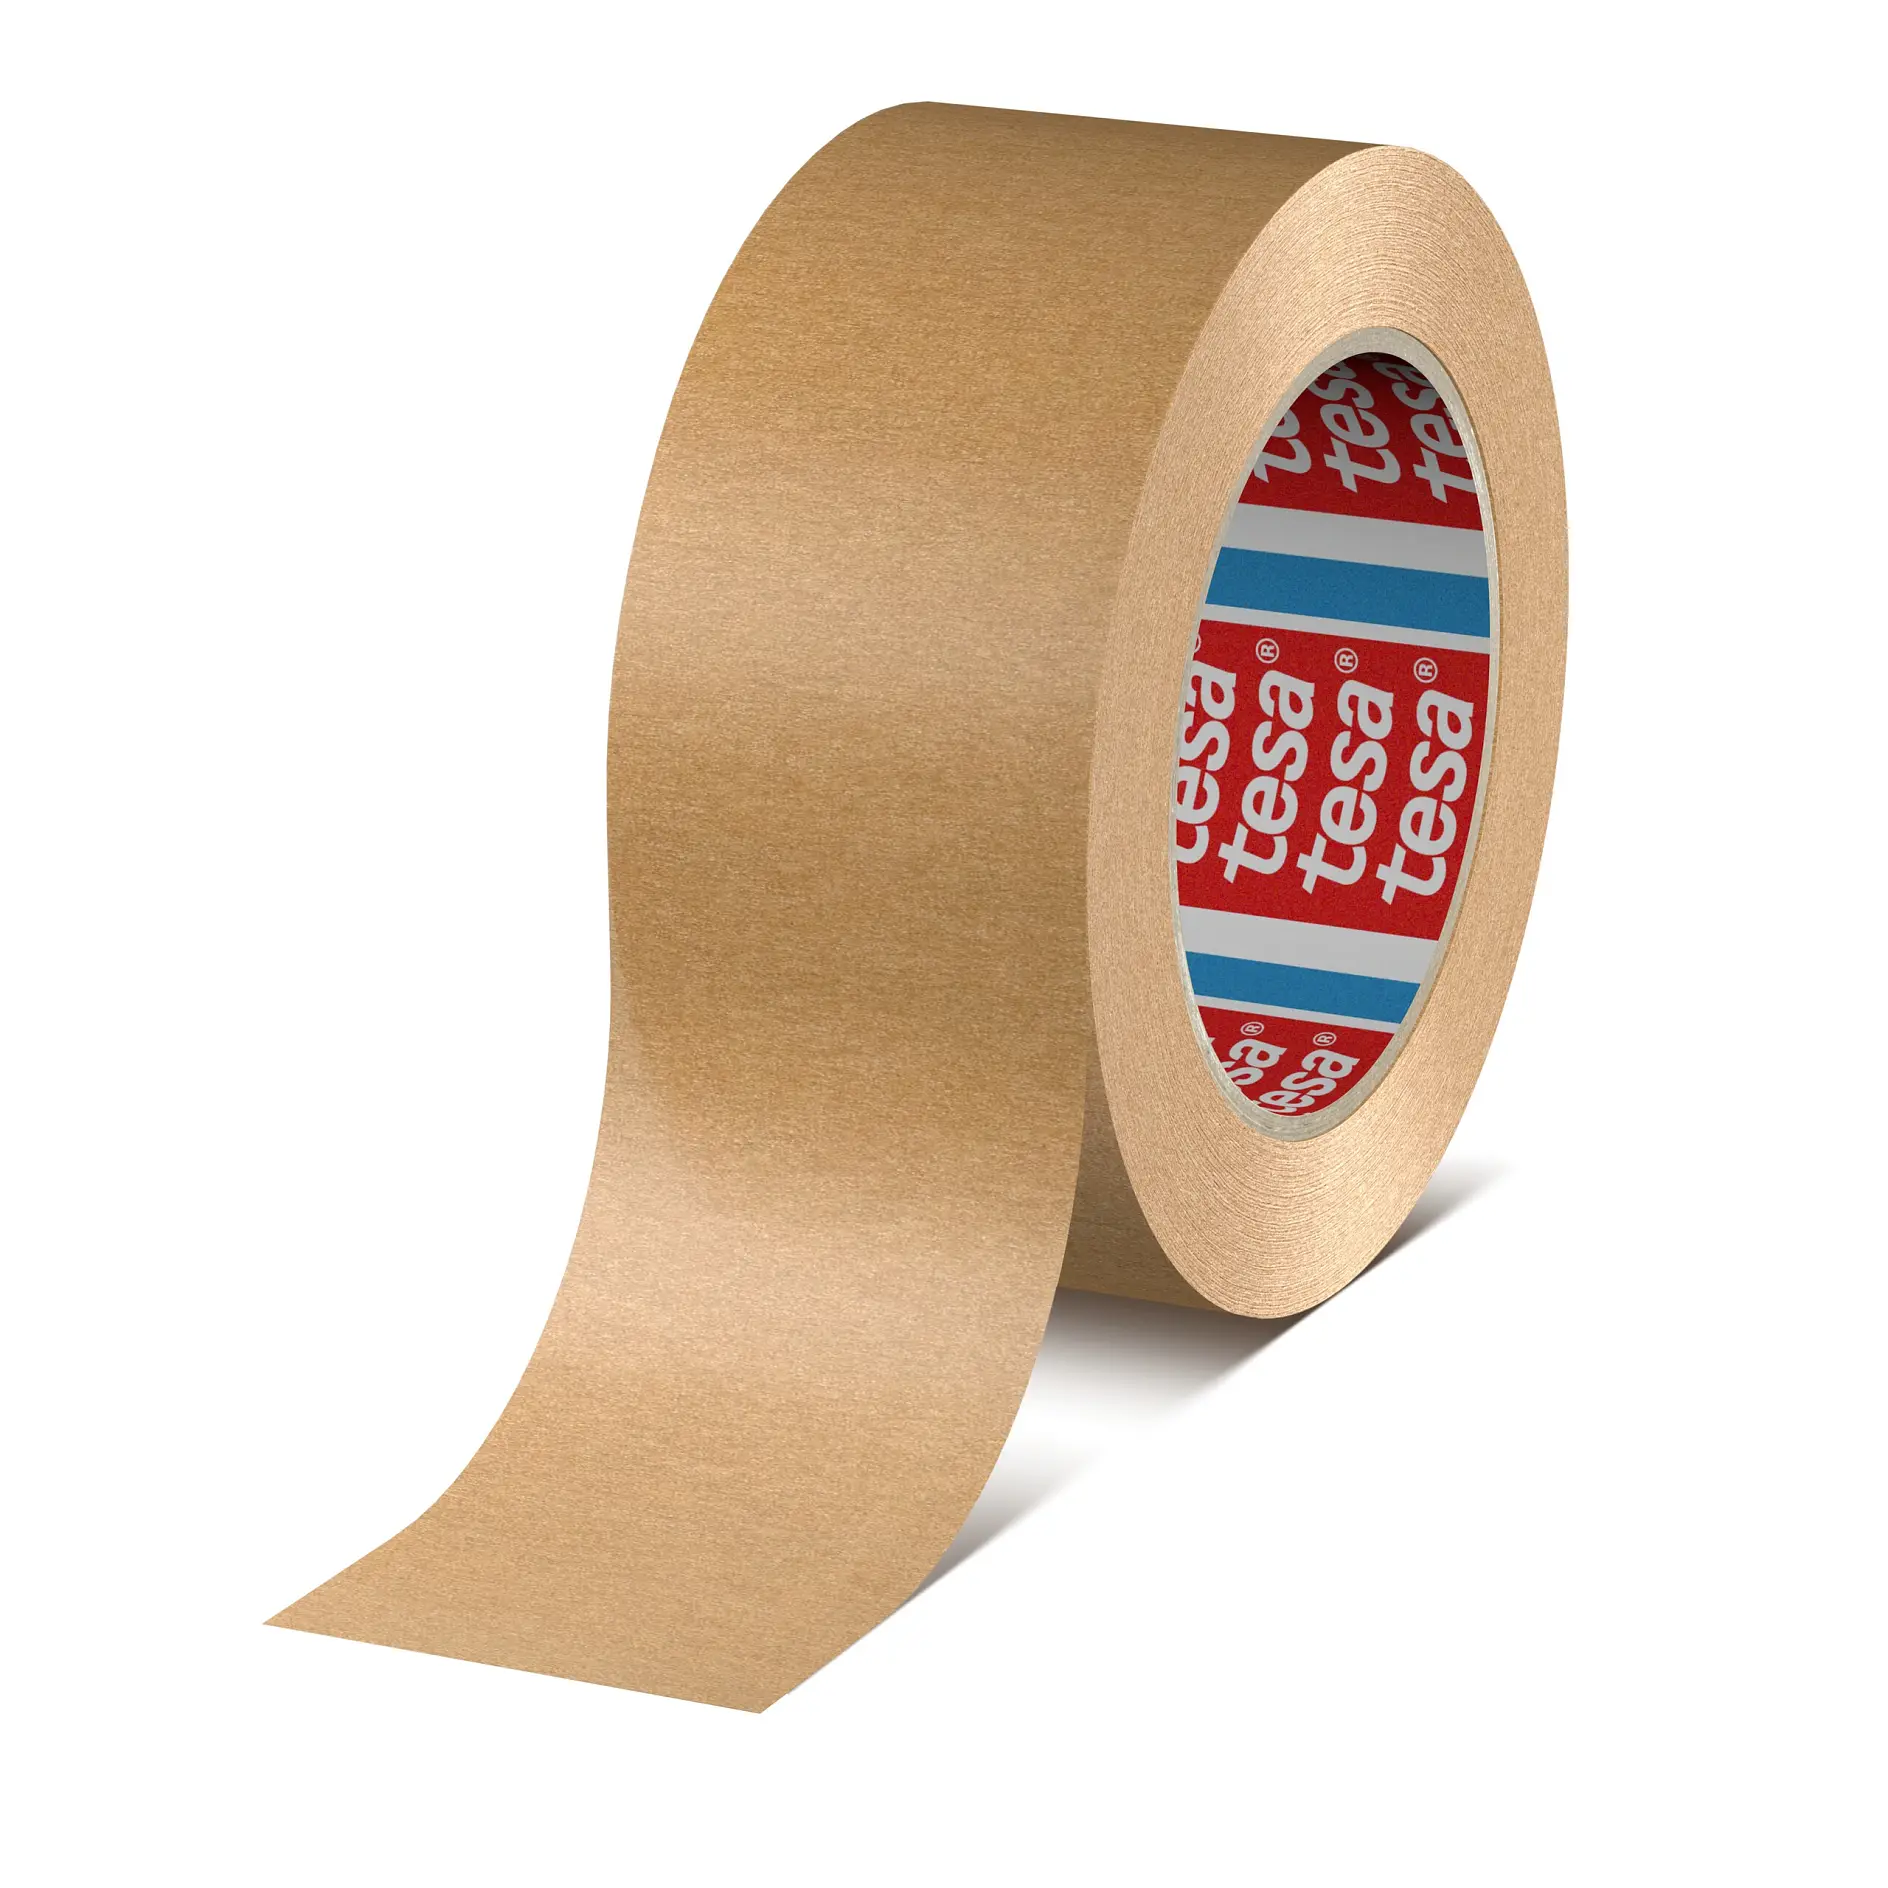 tesa-4713-paper-carton-sealing-tape-chamois-47130000000-pr